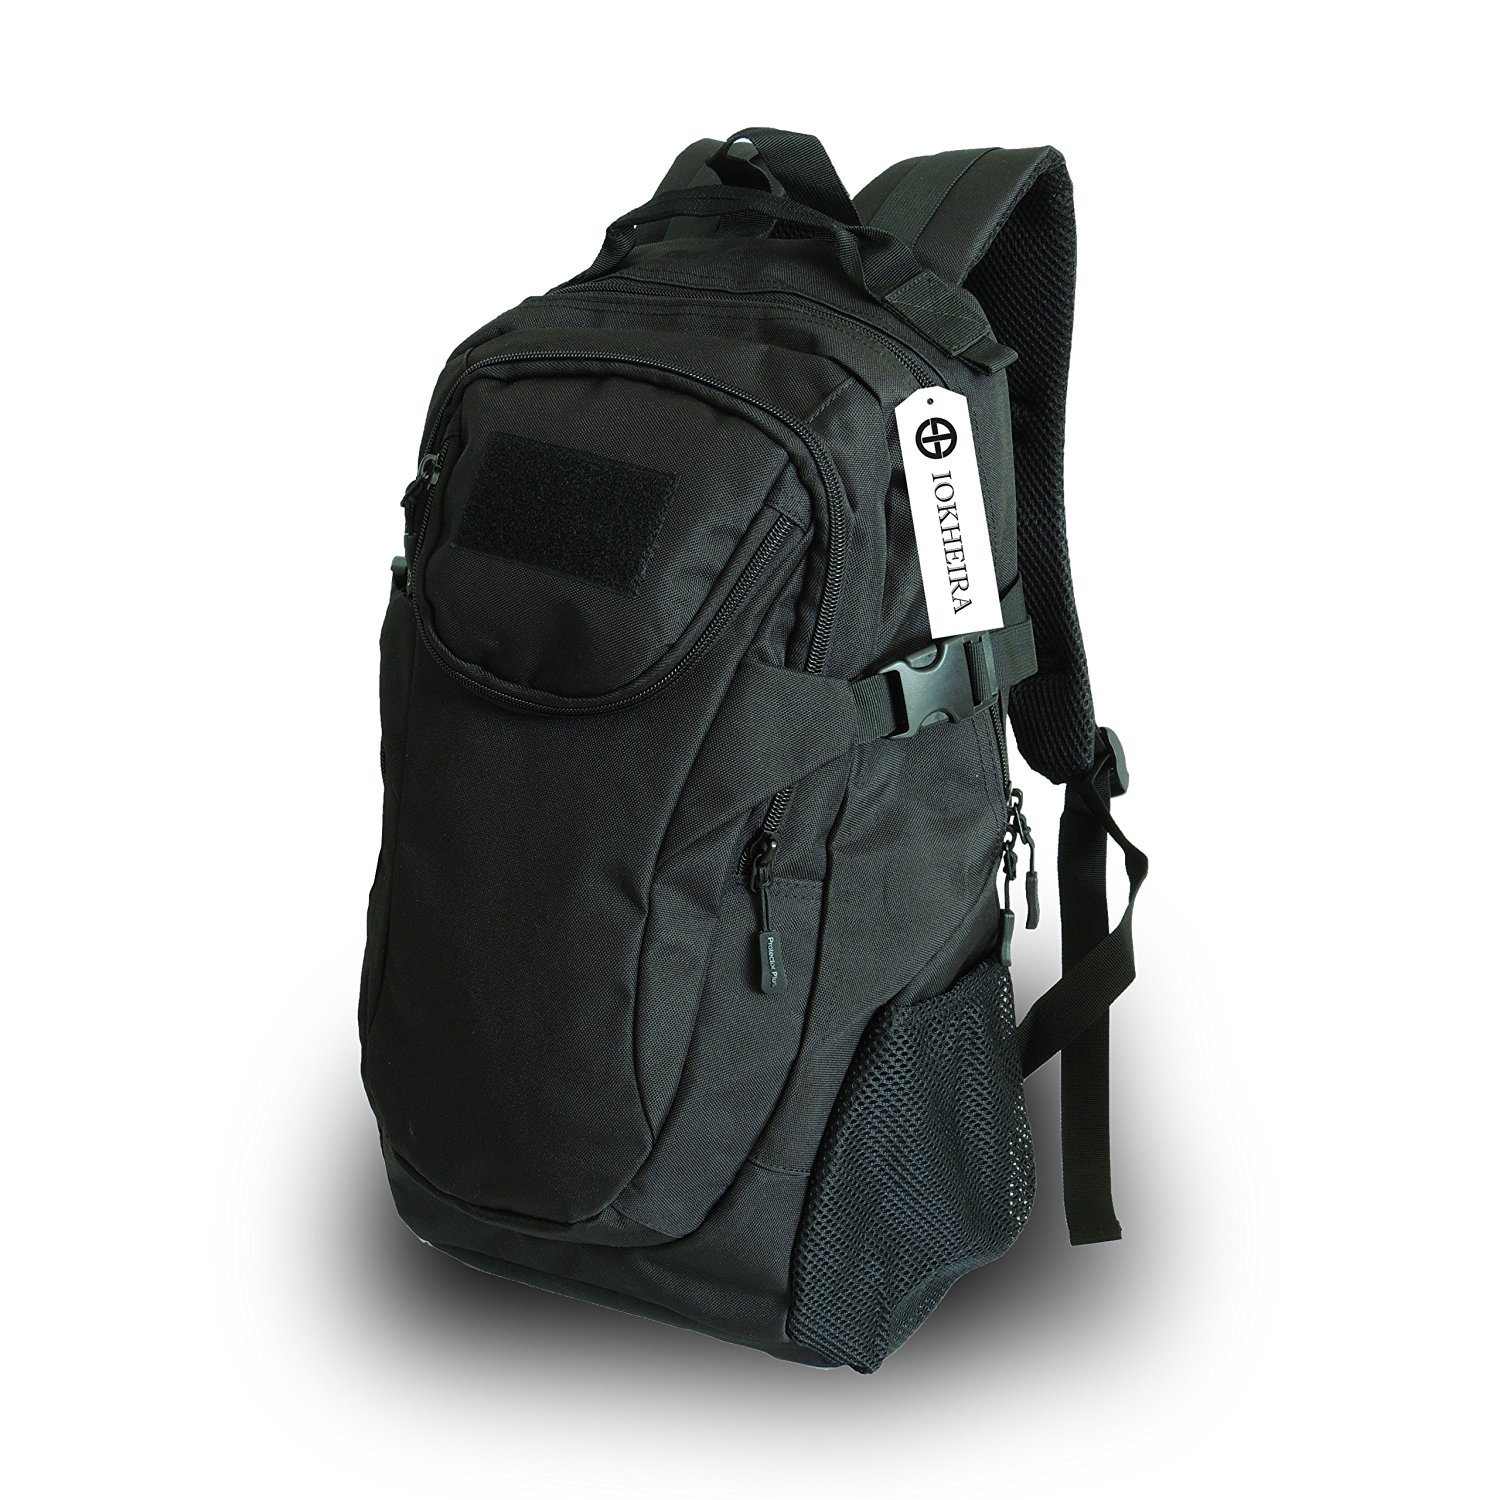 IOKHEIRA 25L 600D Patch Outdoor Sport Tactical Military Assault Bag Backpack Daypack